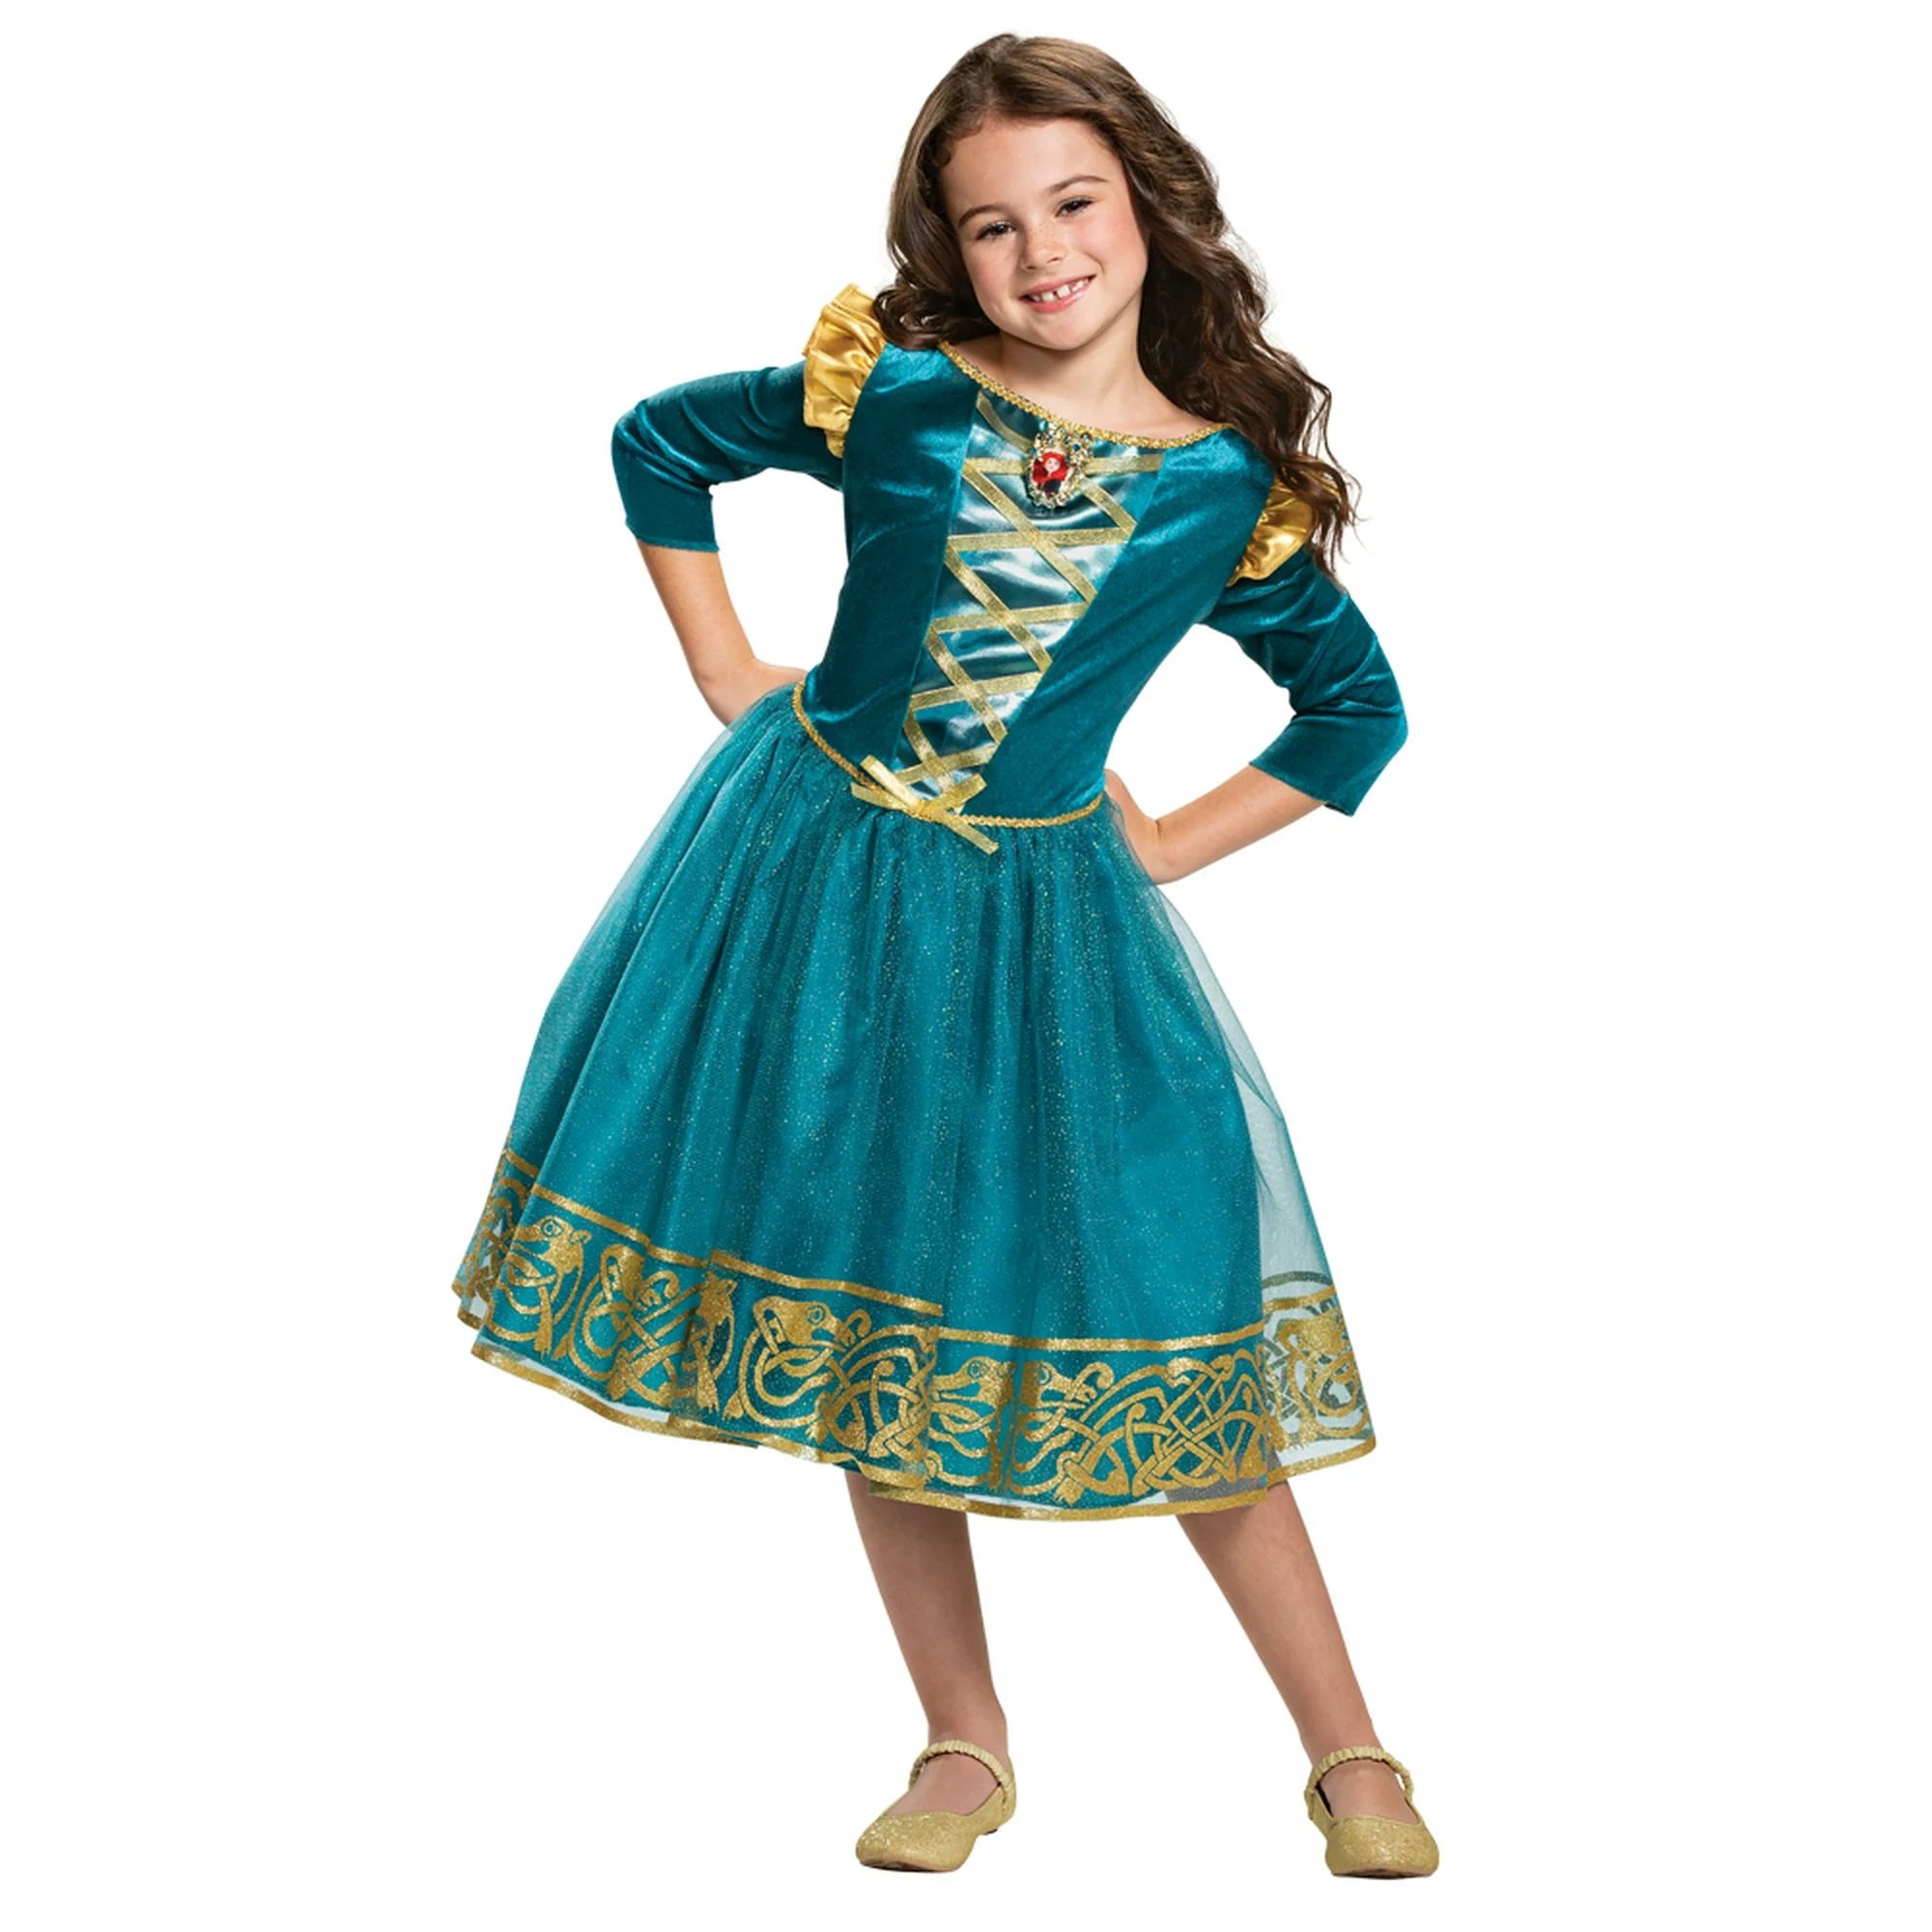 Merida Classic Disney Princess, sizes (4-6X) - Walmart.com | Walmart (US)